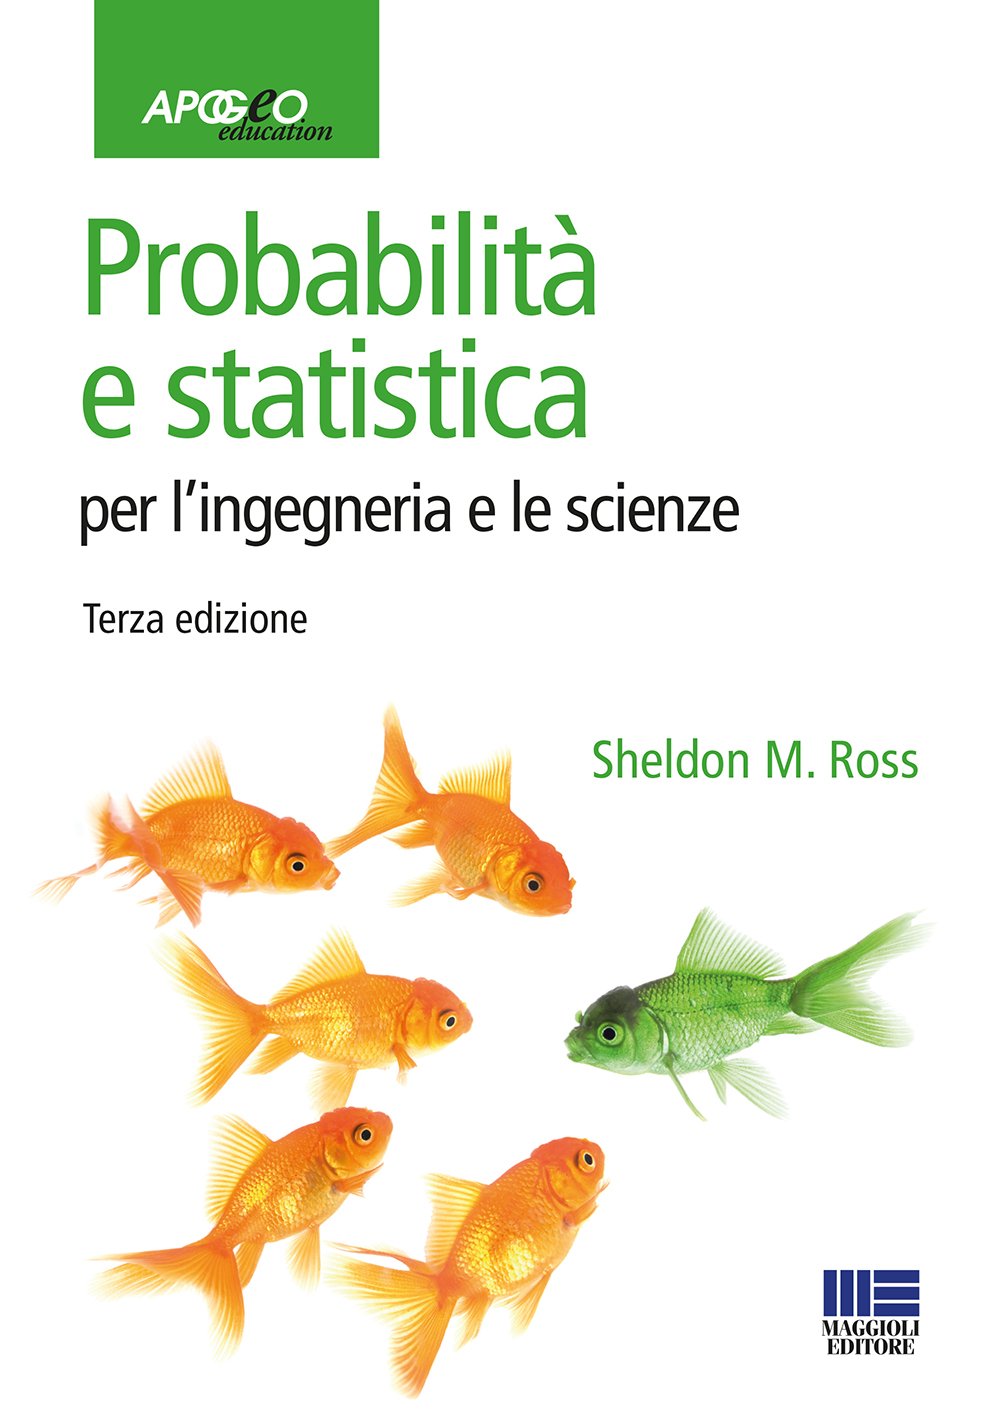 Probabilità e statistica, per l'ingegneria e le scienze - III Edizione